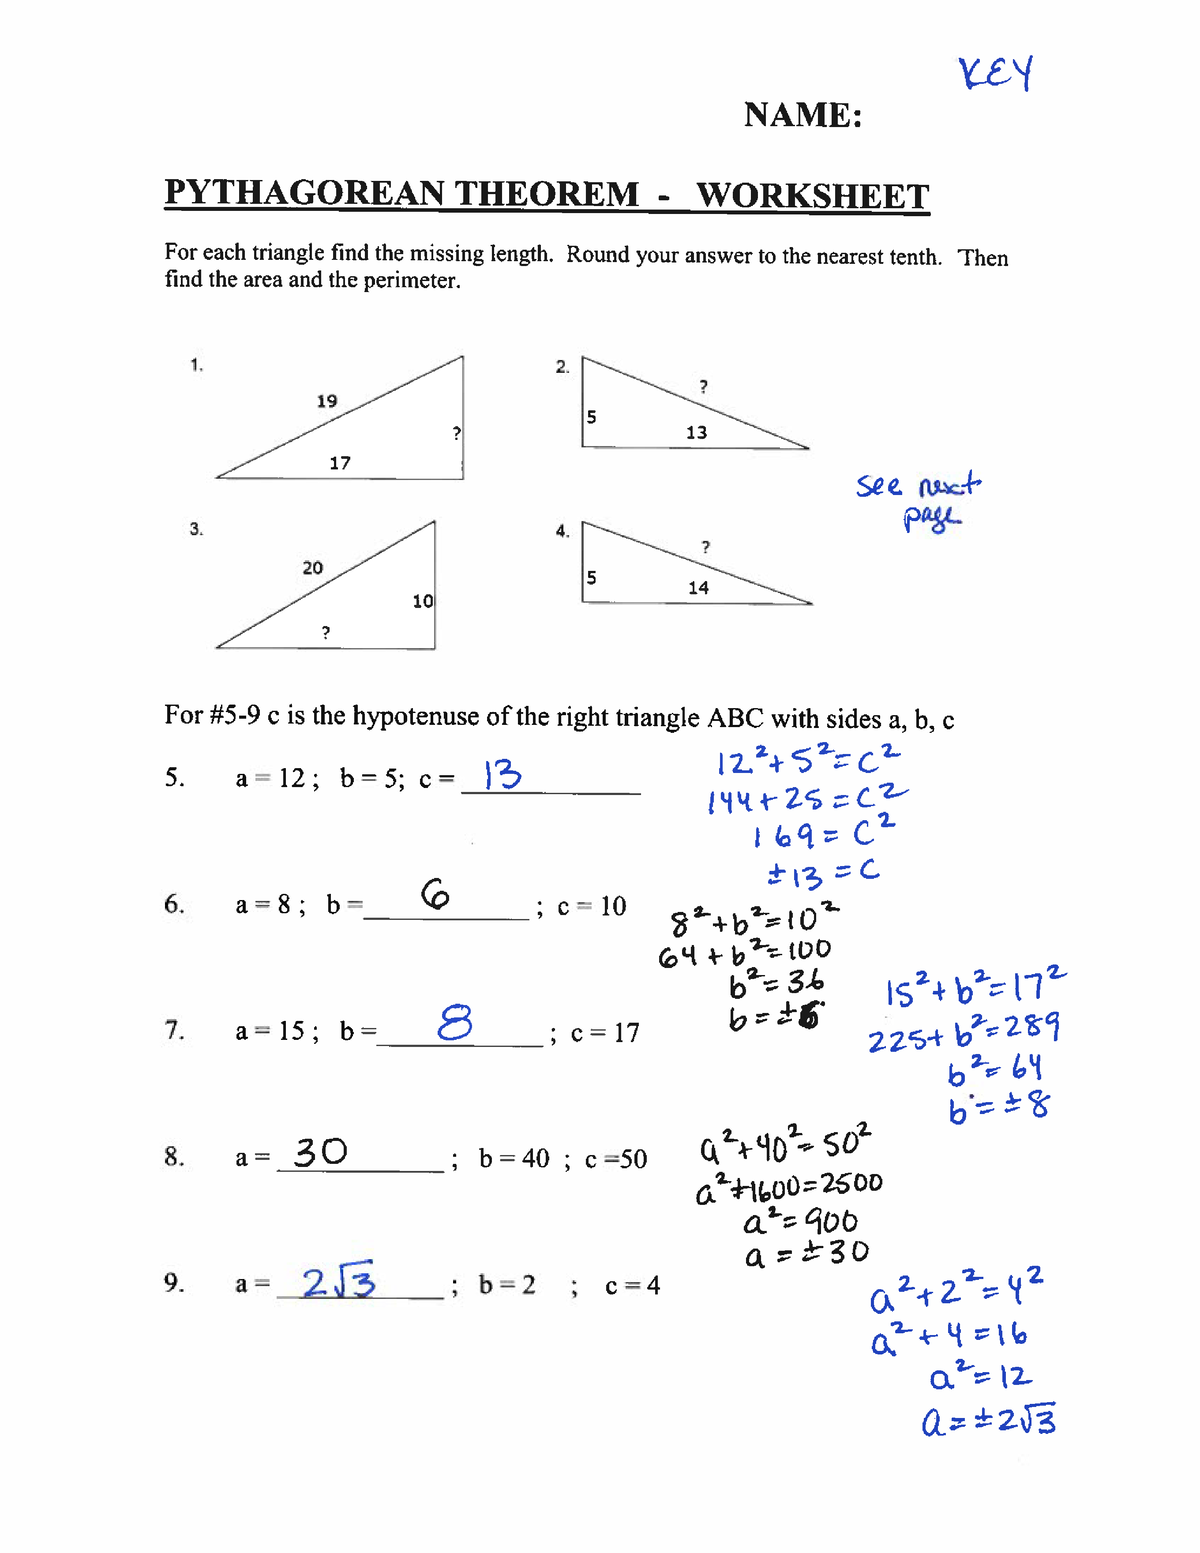 pythagorean theorem assignment answer key pdf